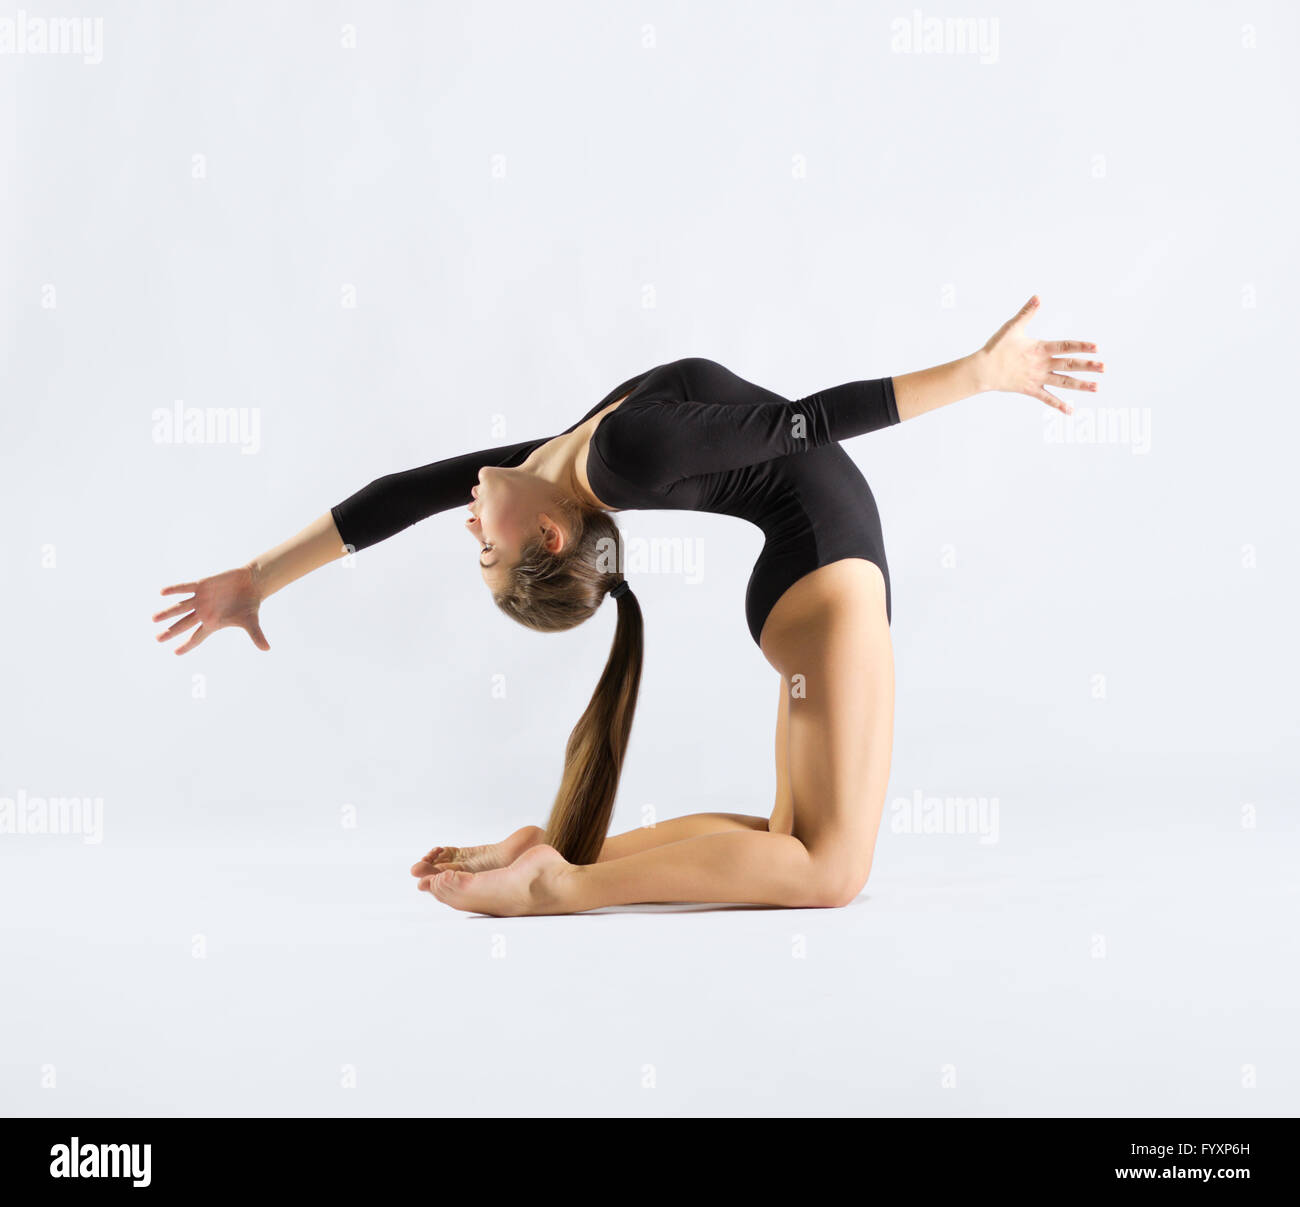 Young girl engaged art gymnastic on grey Stock Photo